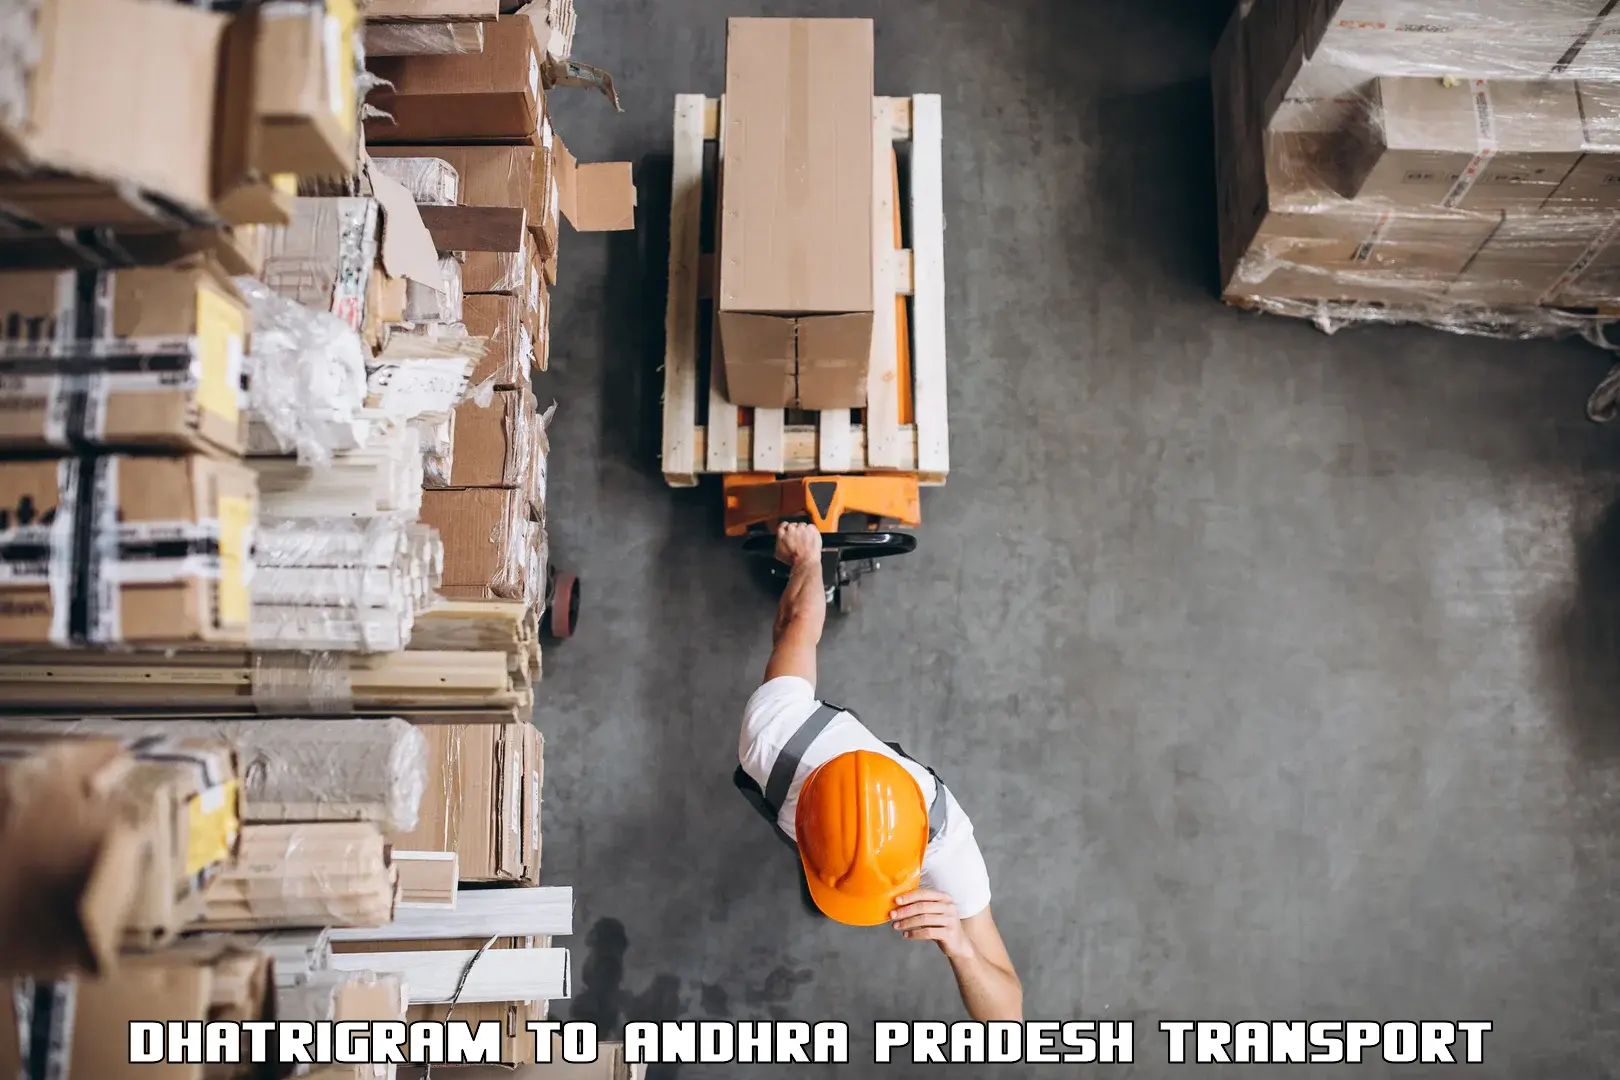 Air freight transport services Dhatrigram to Andhra Pradesh